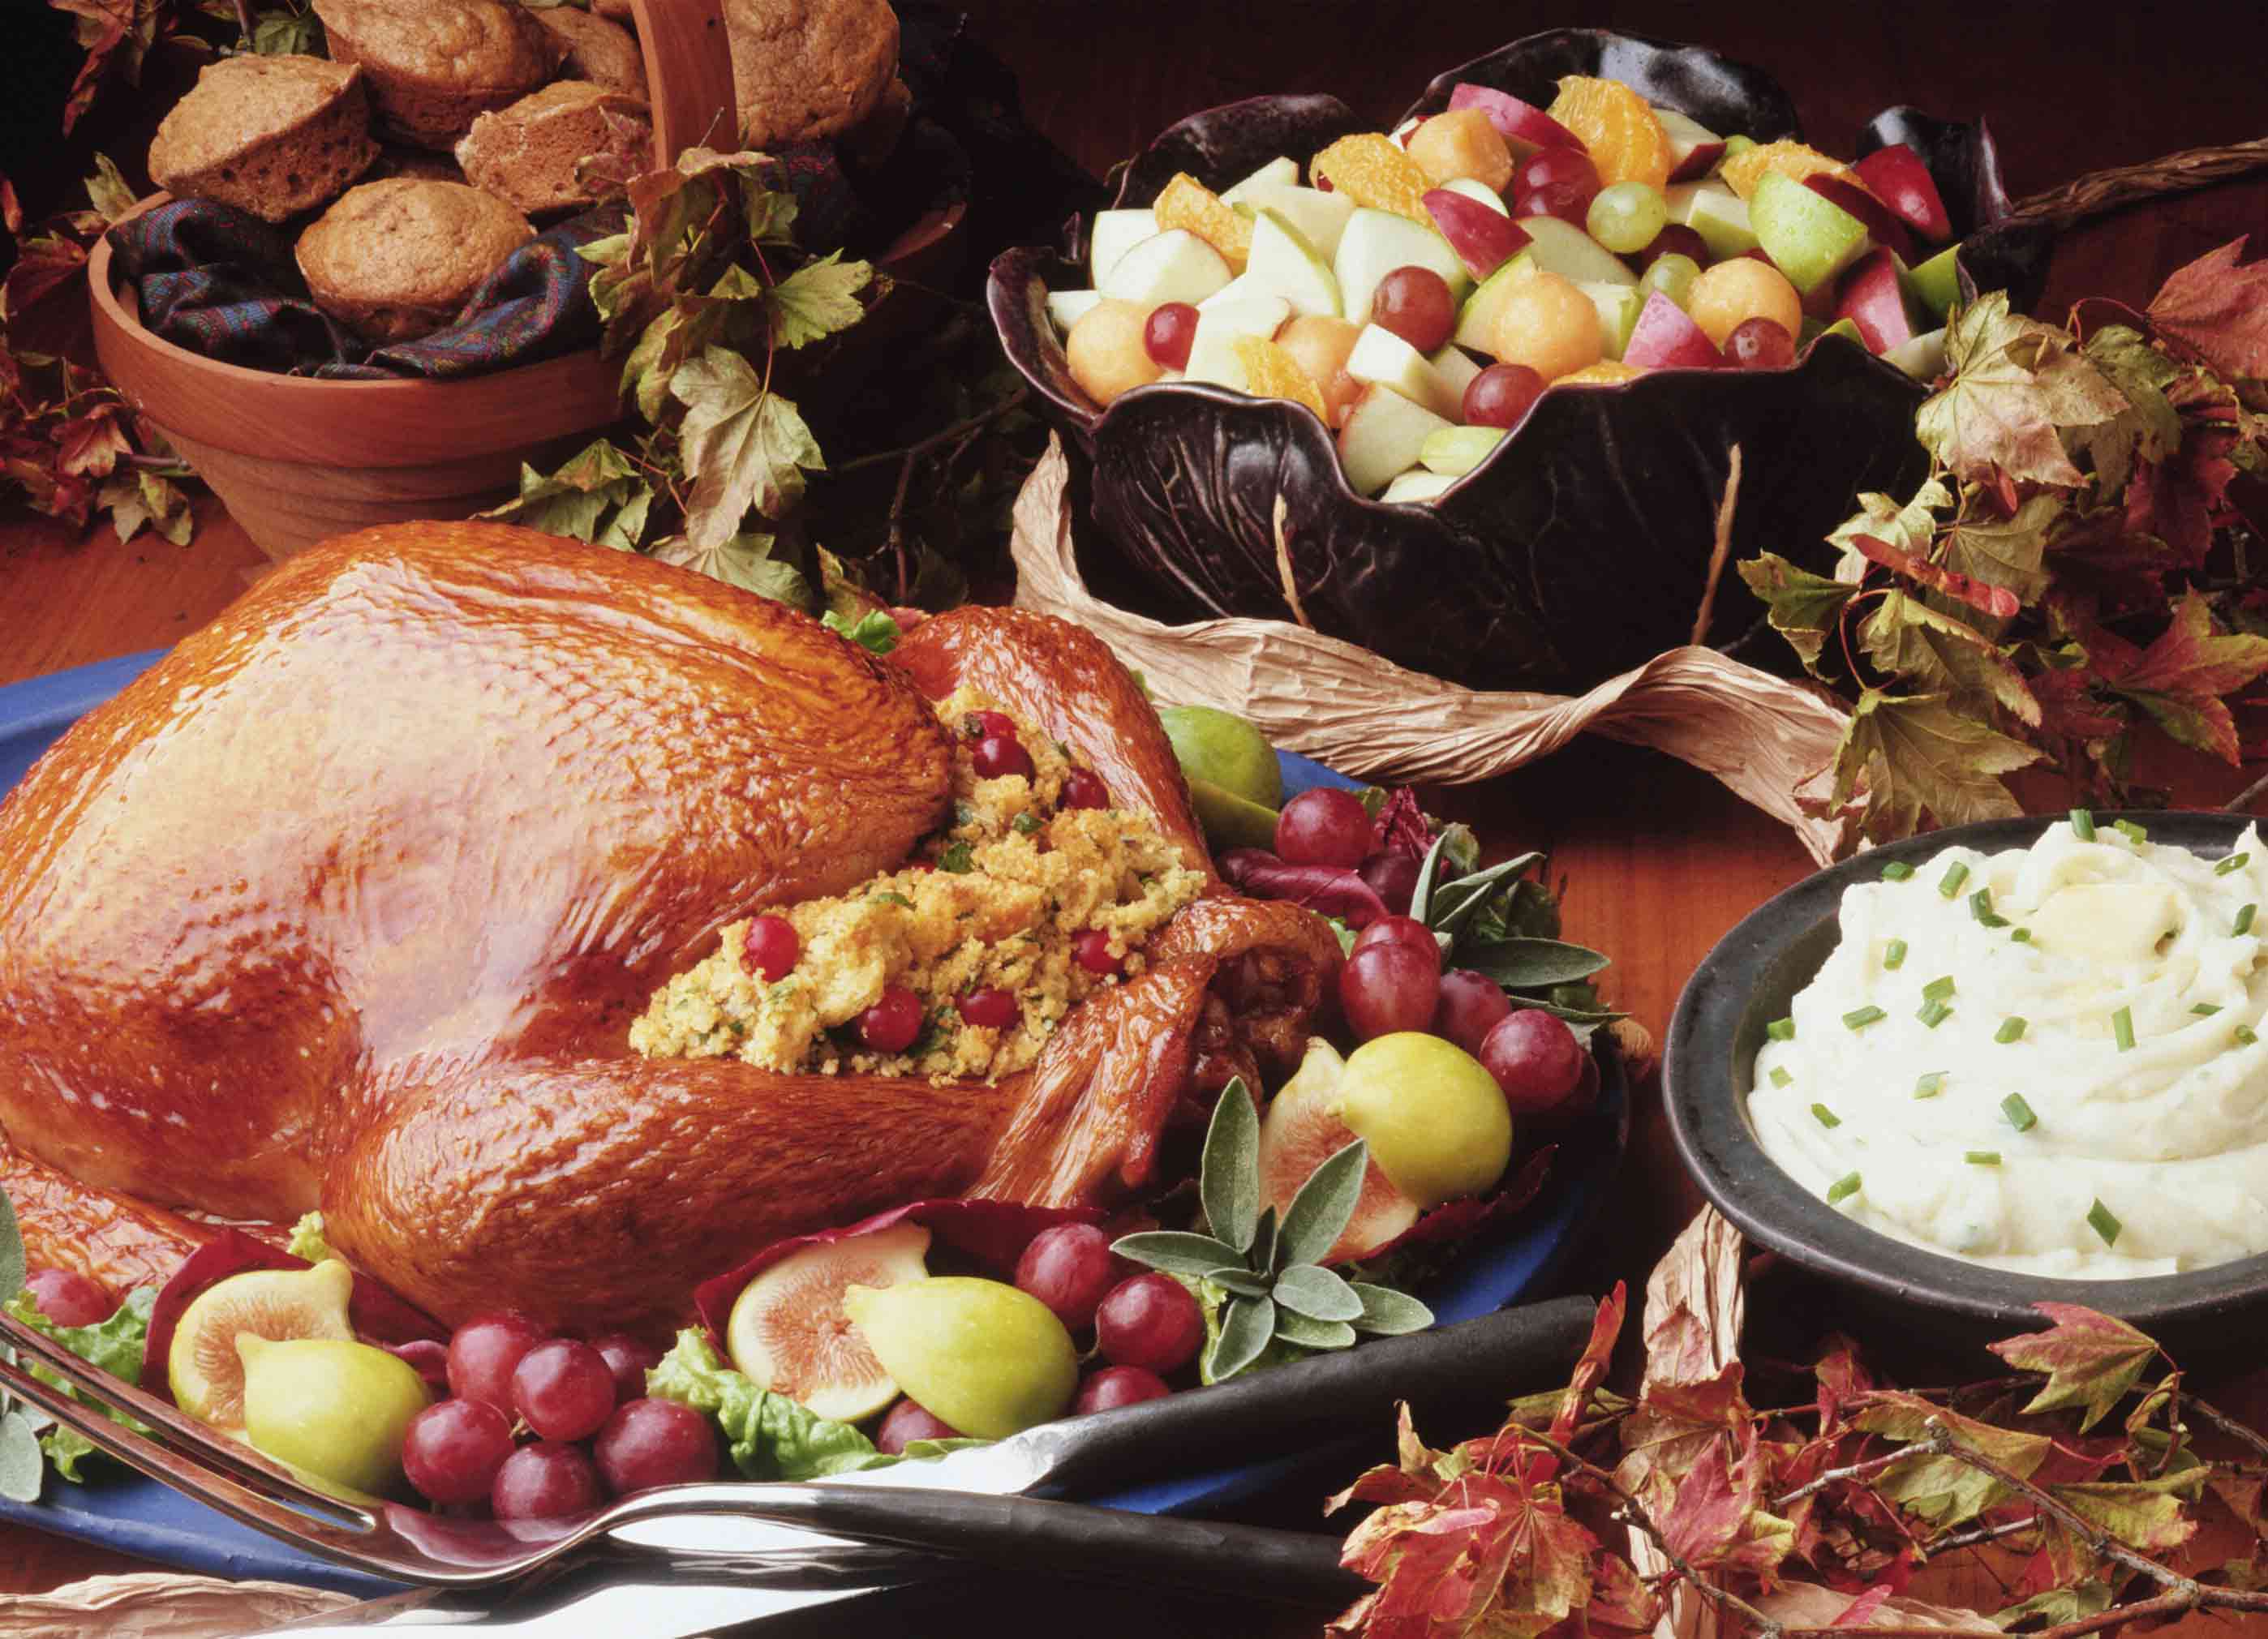 Northern Michigan Restaurants Serving Thanksgiving Dinner 2014